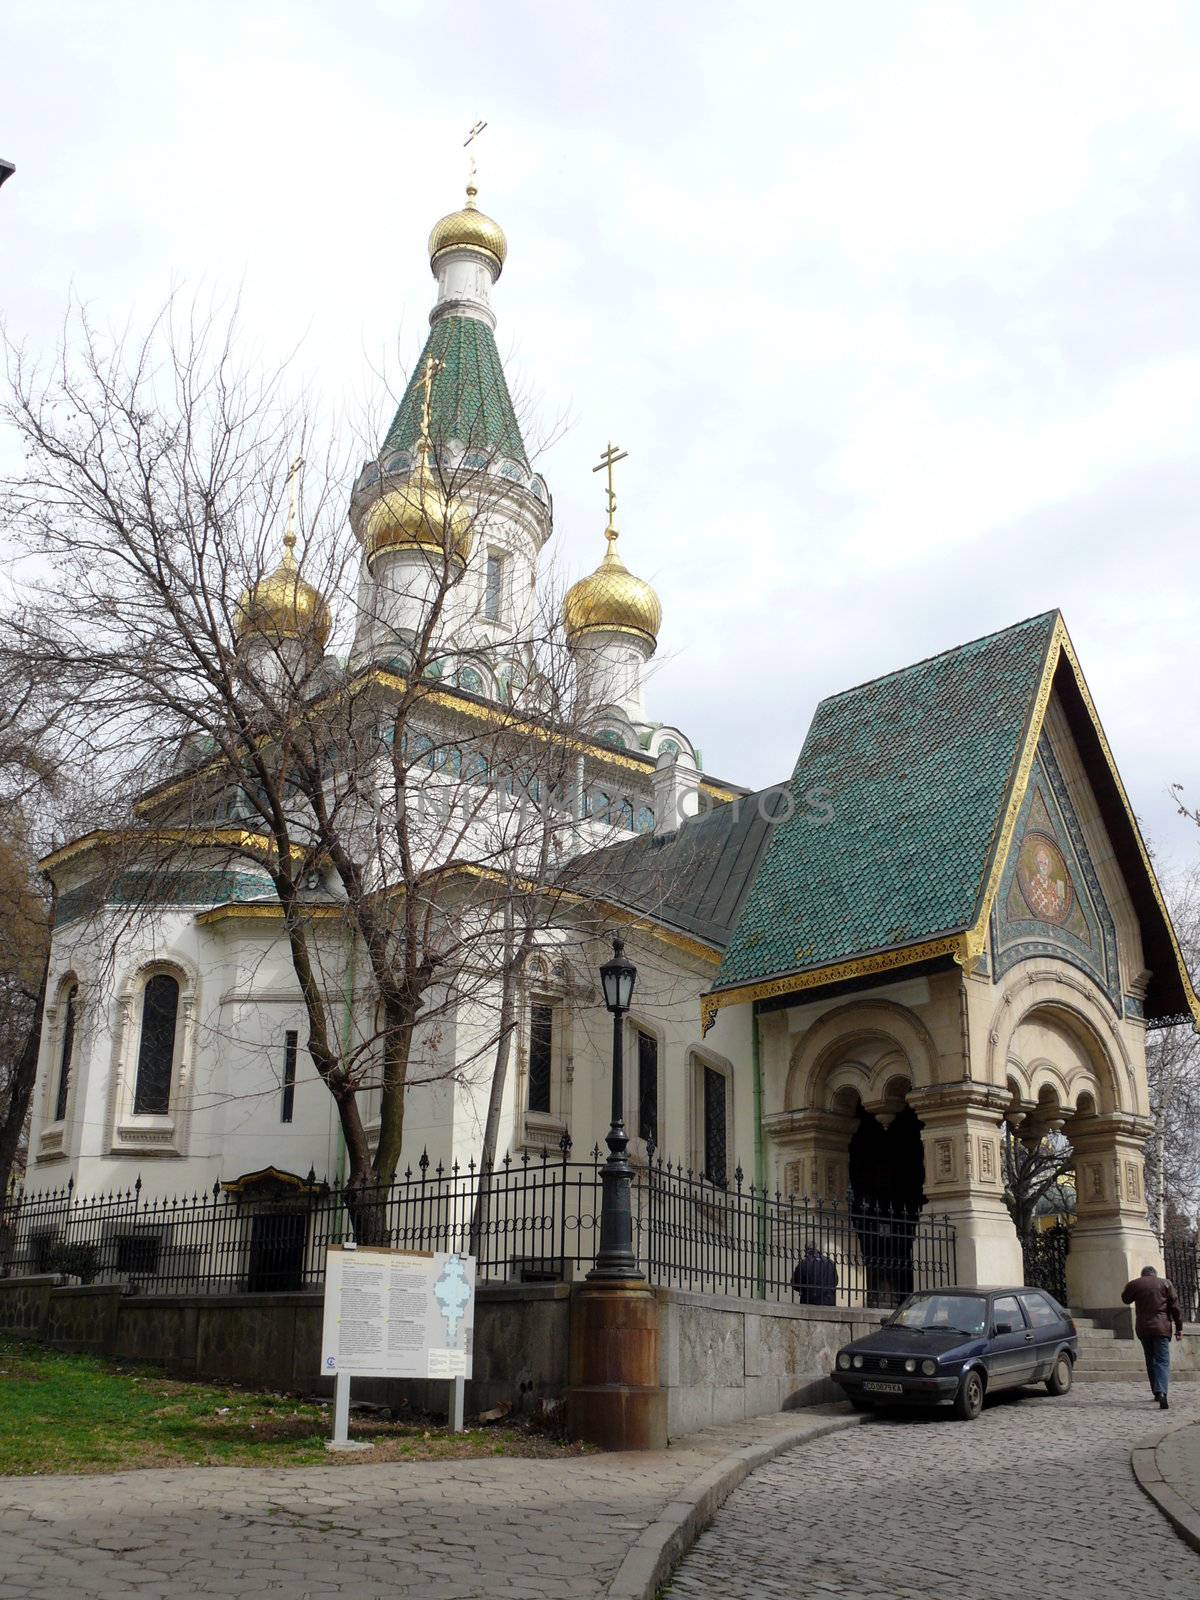 Russian church in Sofia, Bulgaria by Stoyanov